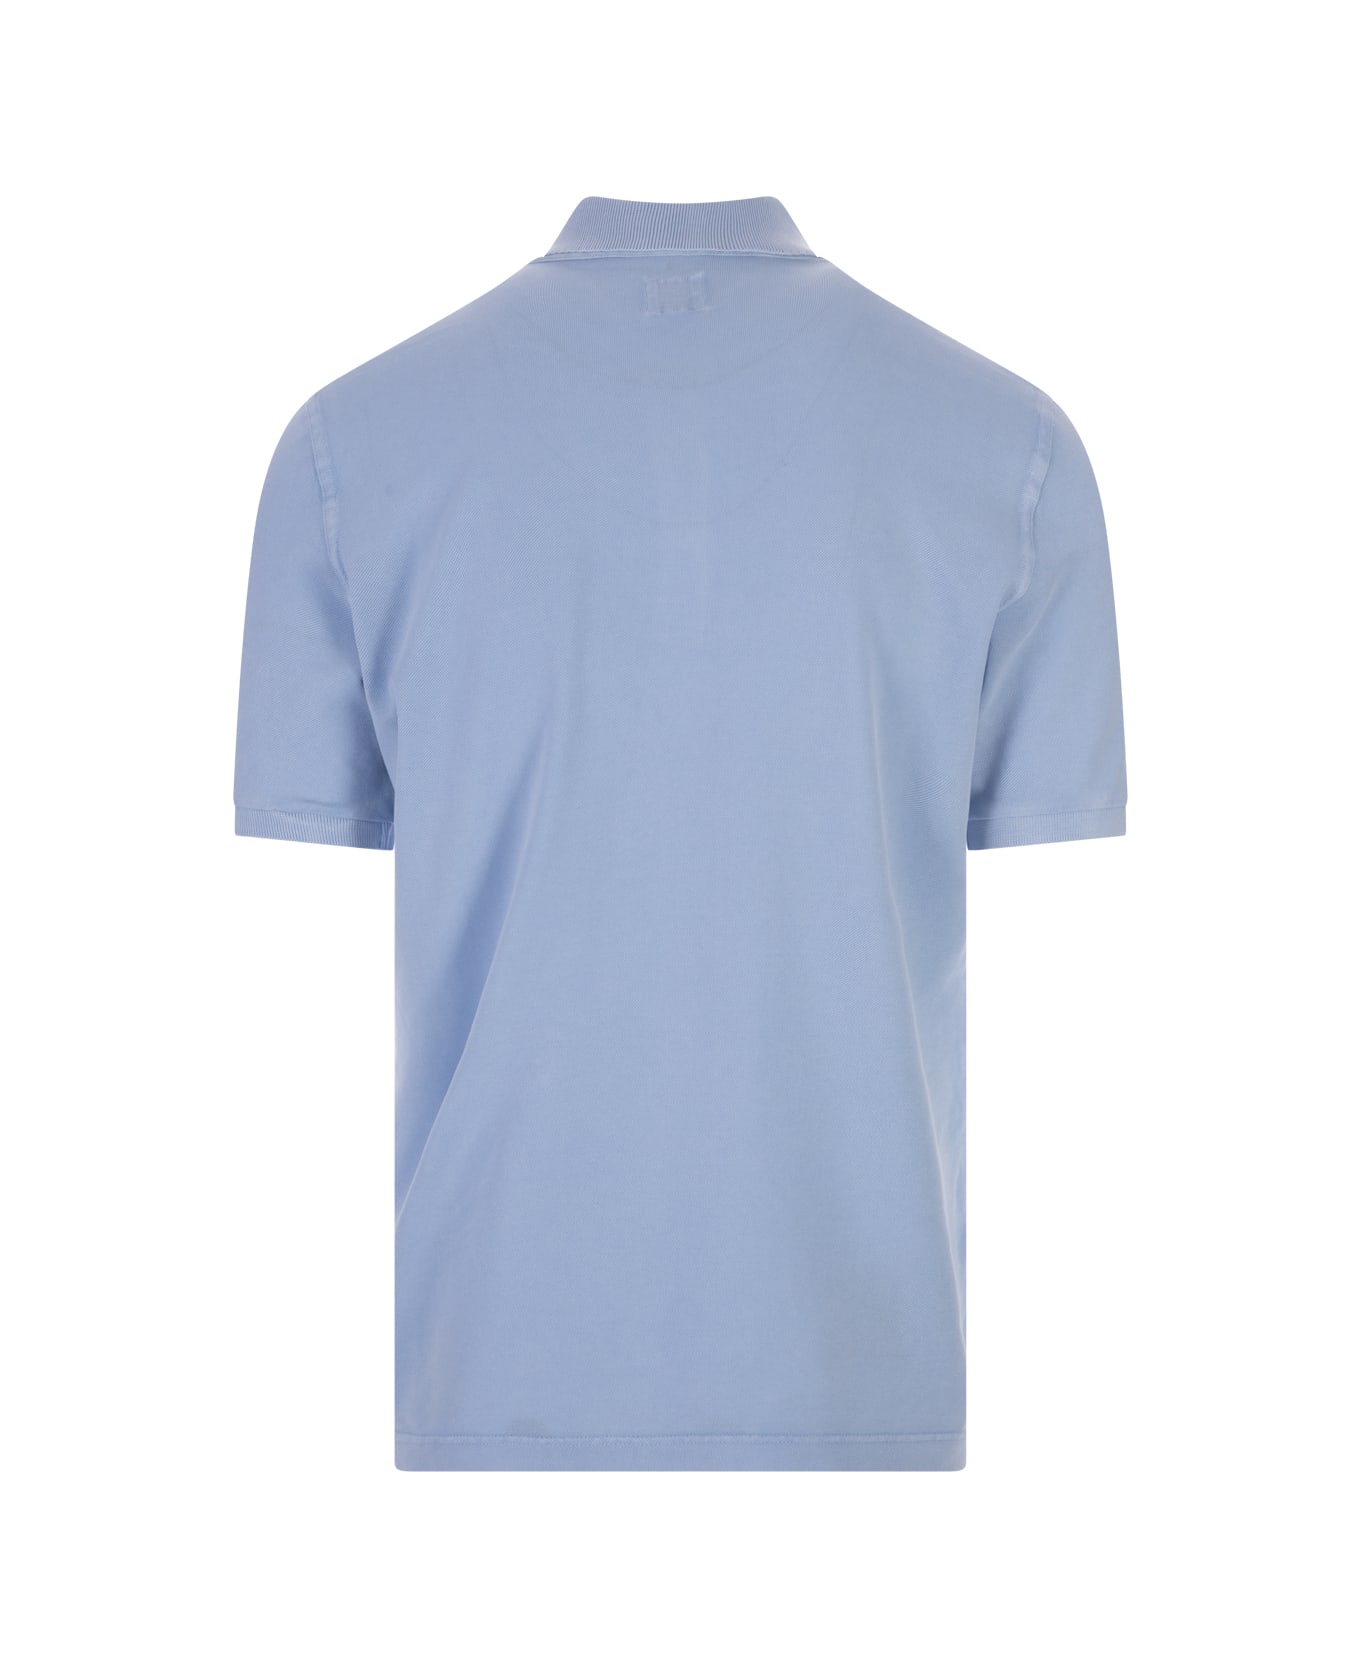 Fedeli Light Blue Polo Shirt In Piqué Cotton - Blue ポロシャツ